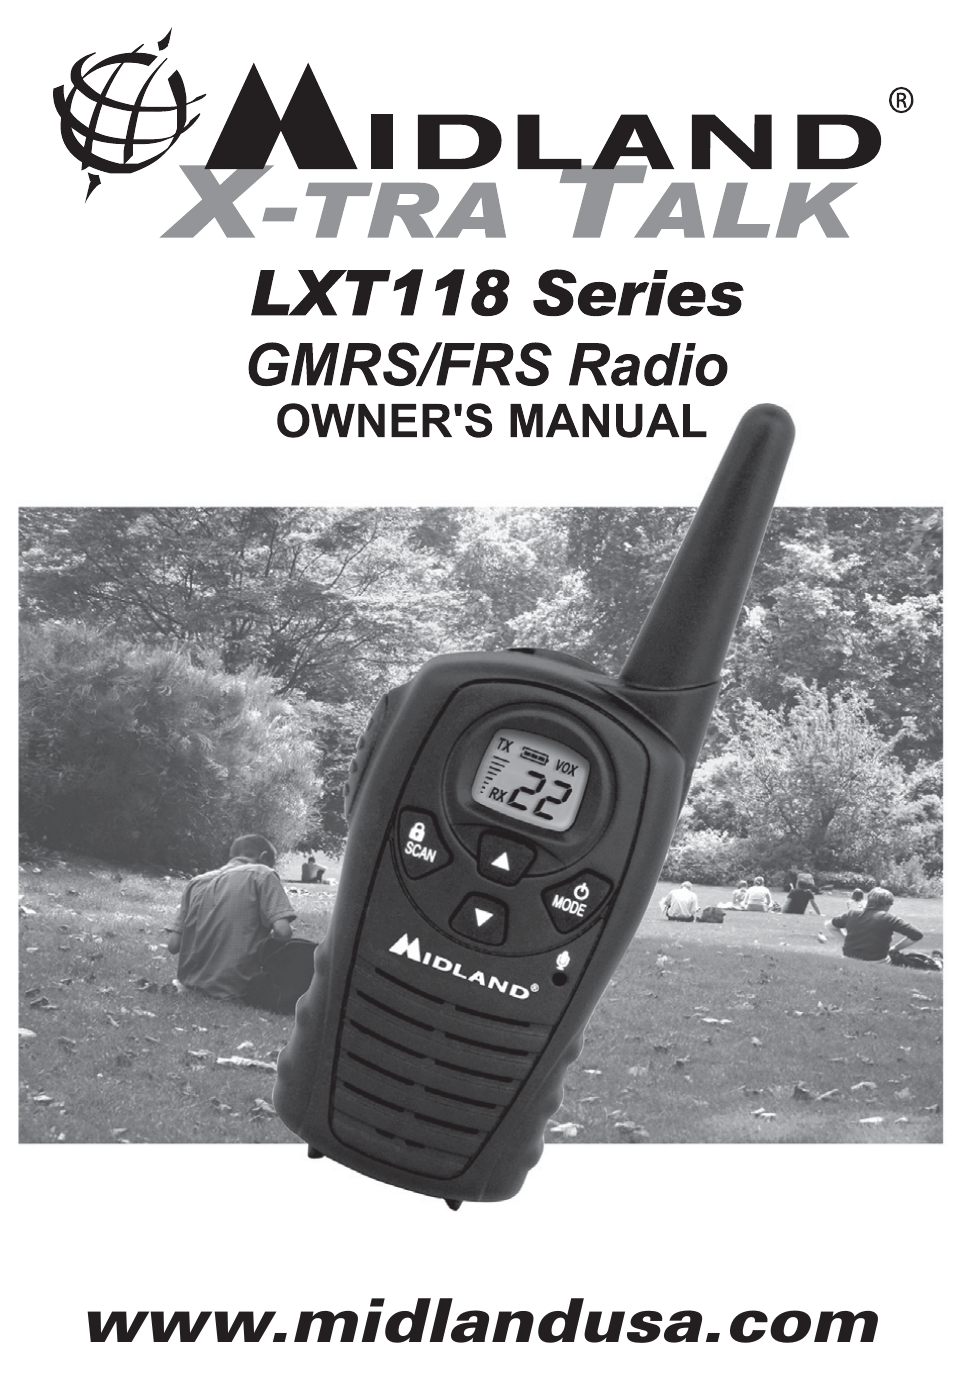 MIDLAND X-TRA TALK LXT118 User Manual | 12 pages